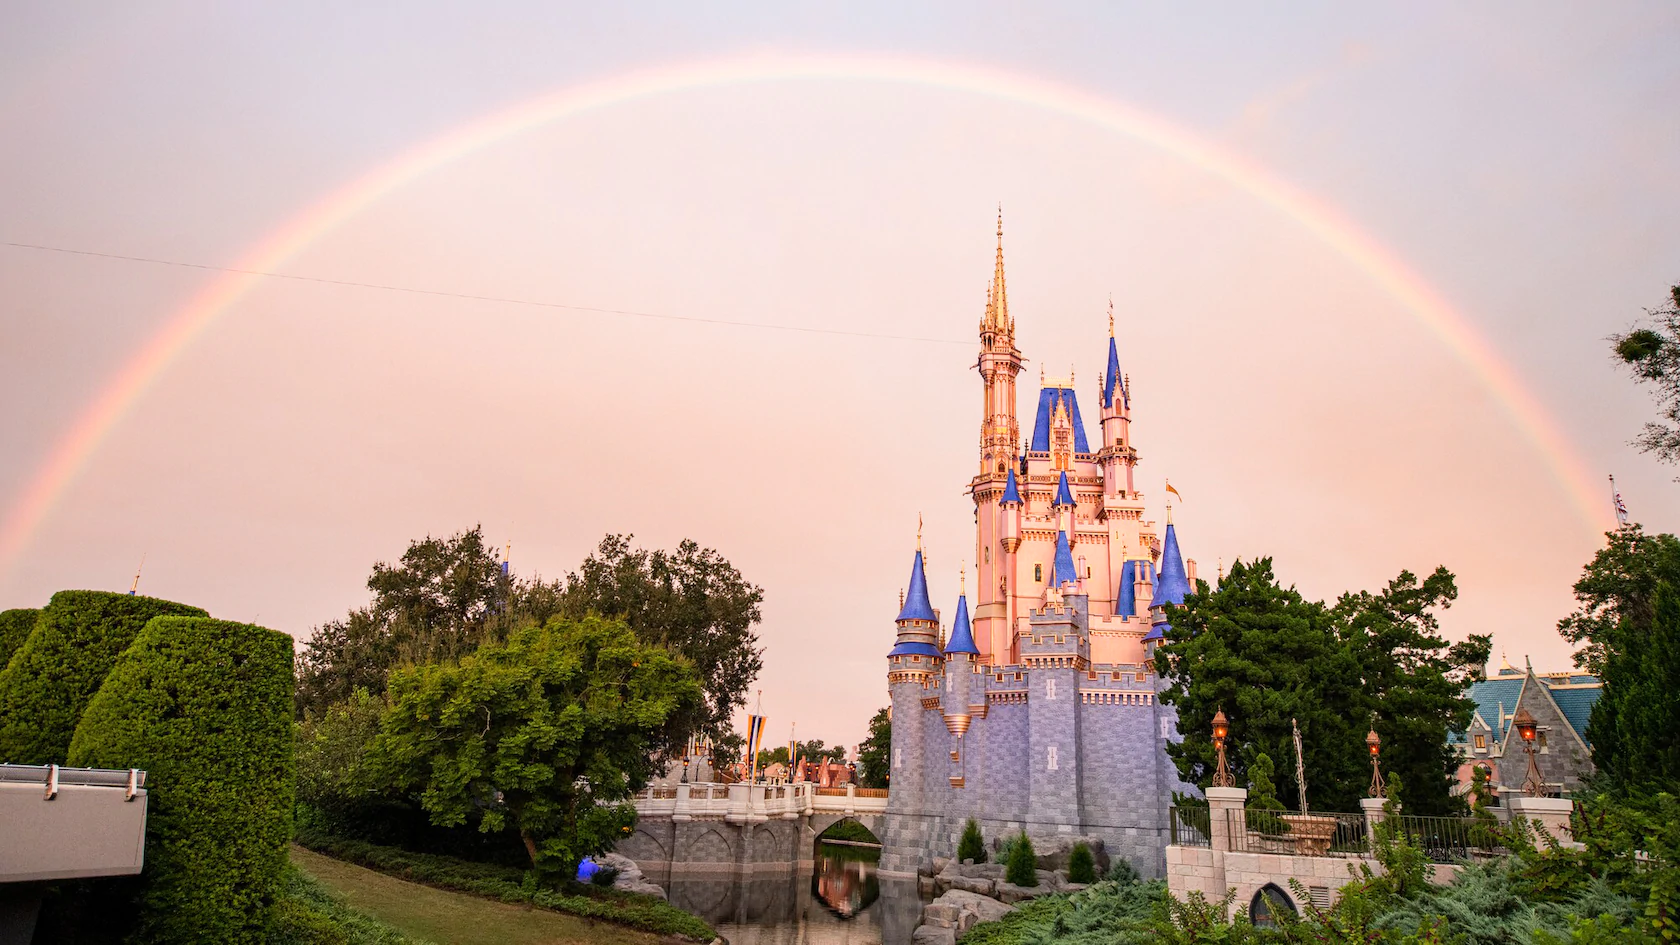 Disney Castles With Rainbows